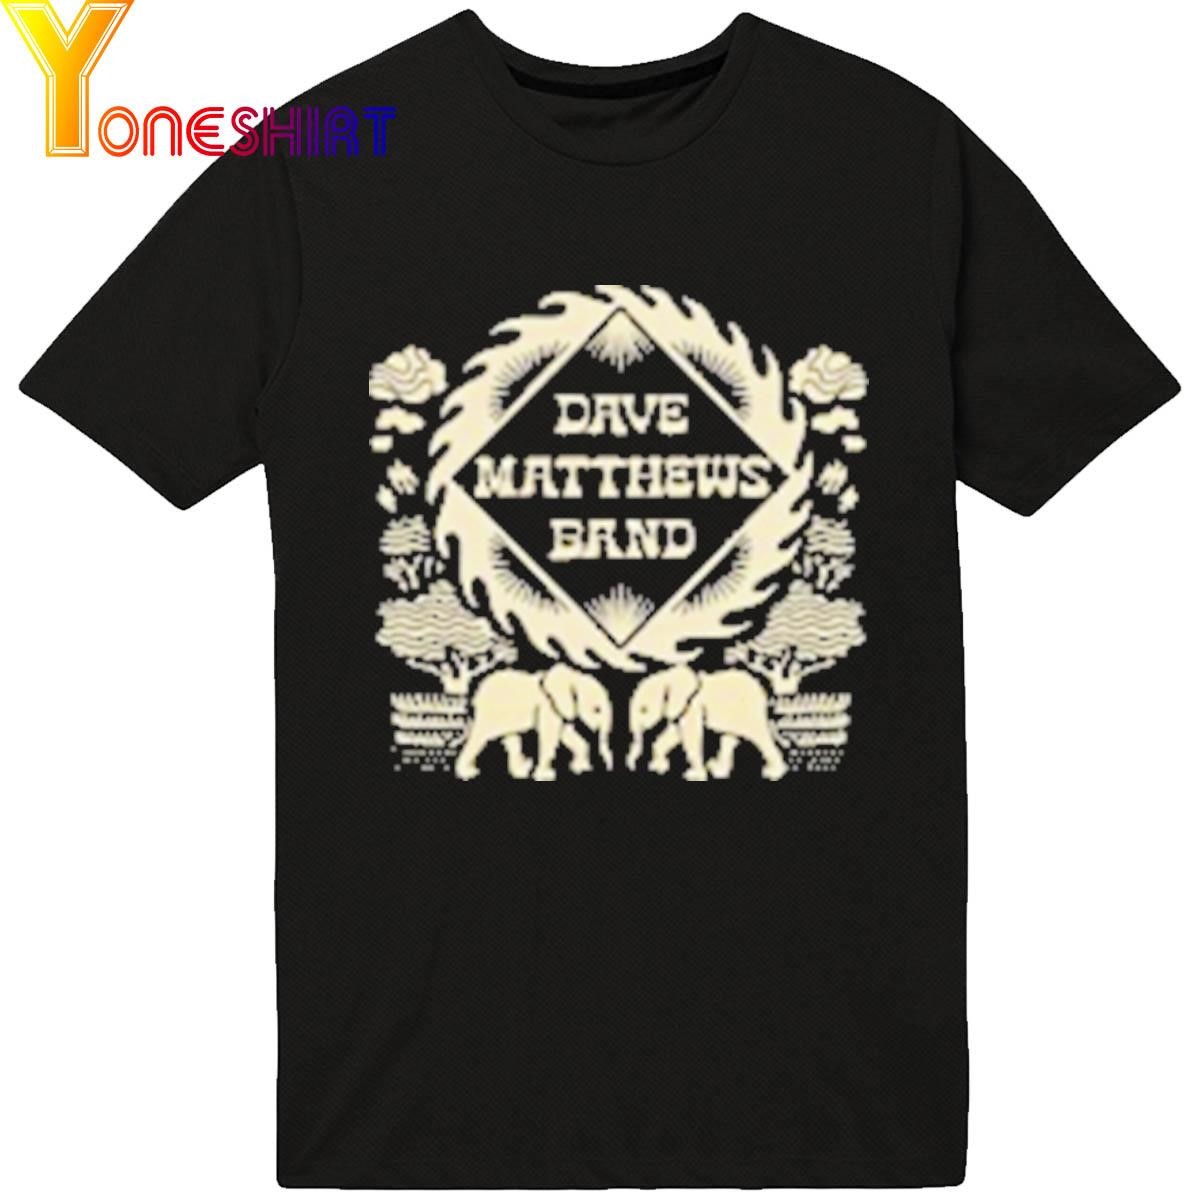 Dave Matthews Band x Reteti Elephant Sanctuary Shirt